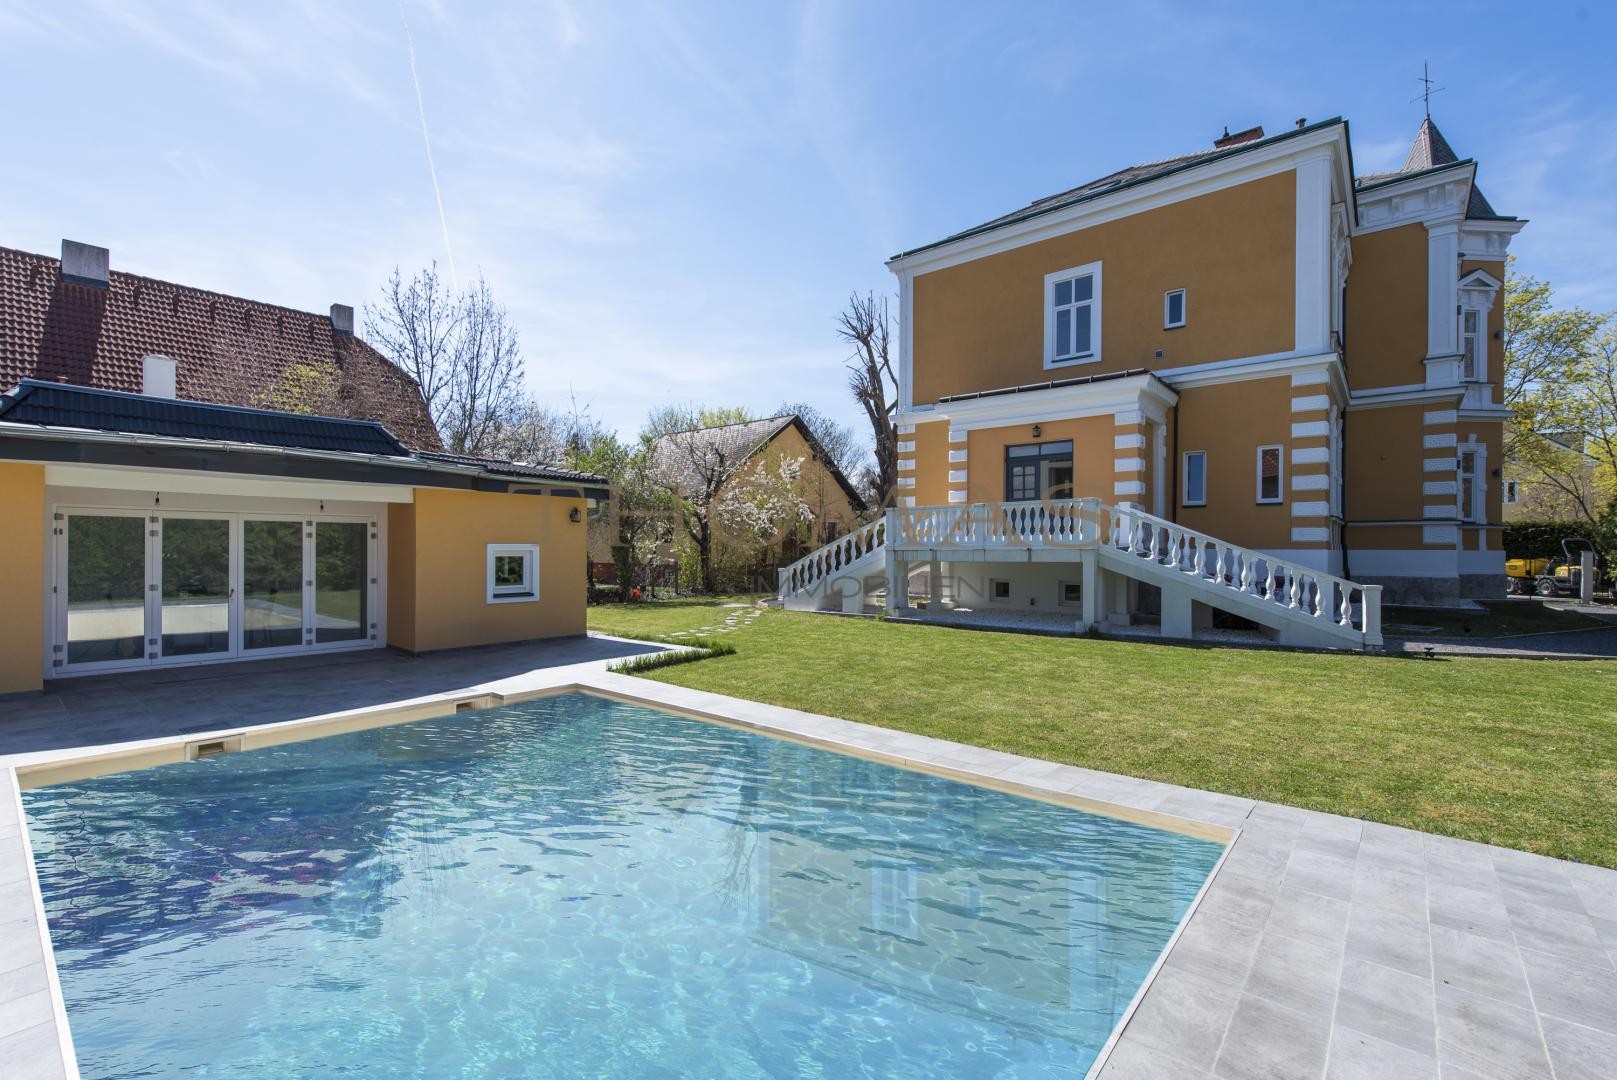 Thomas Immobilien- Jugendstil Villa mit Pool und Poolhaus